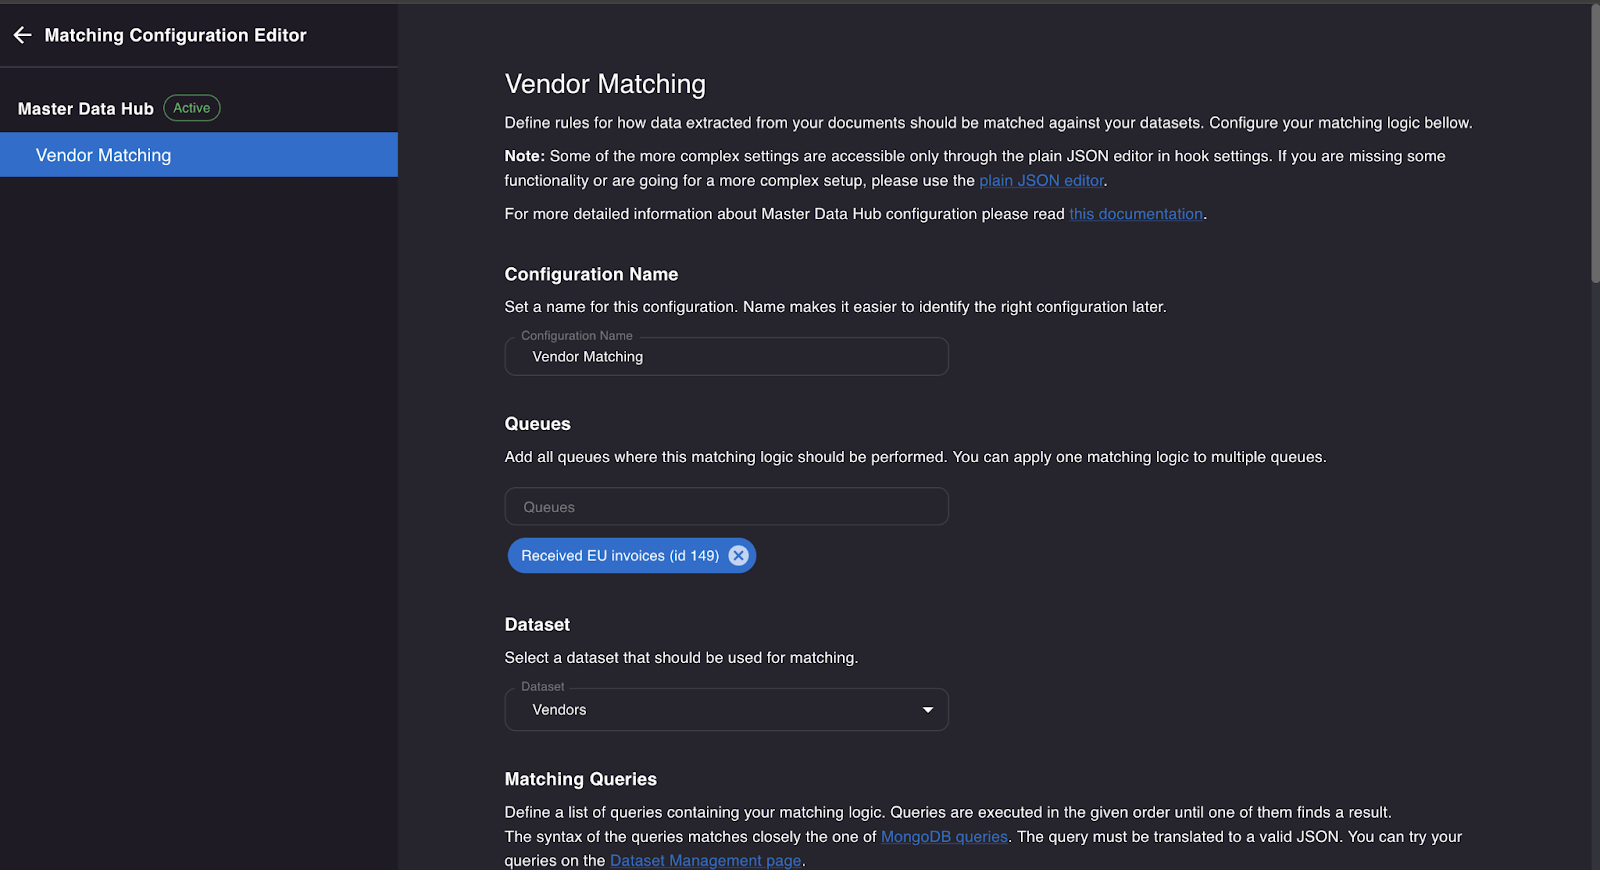 Define rules for vendor matching using Master Data Hub